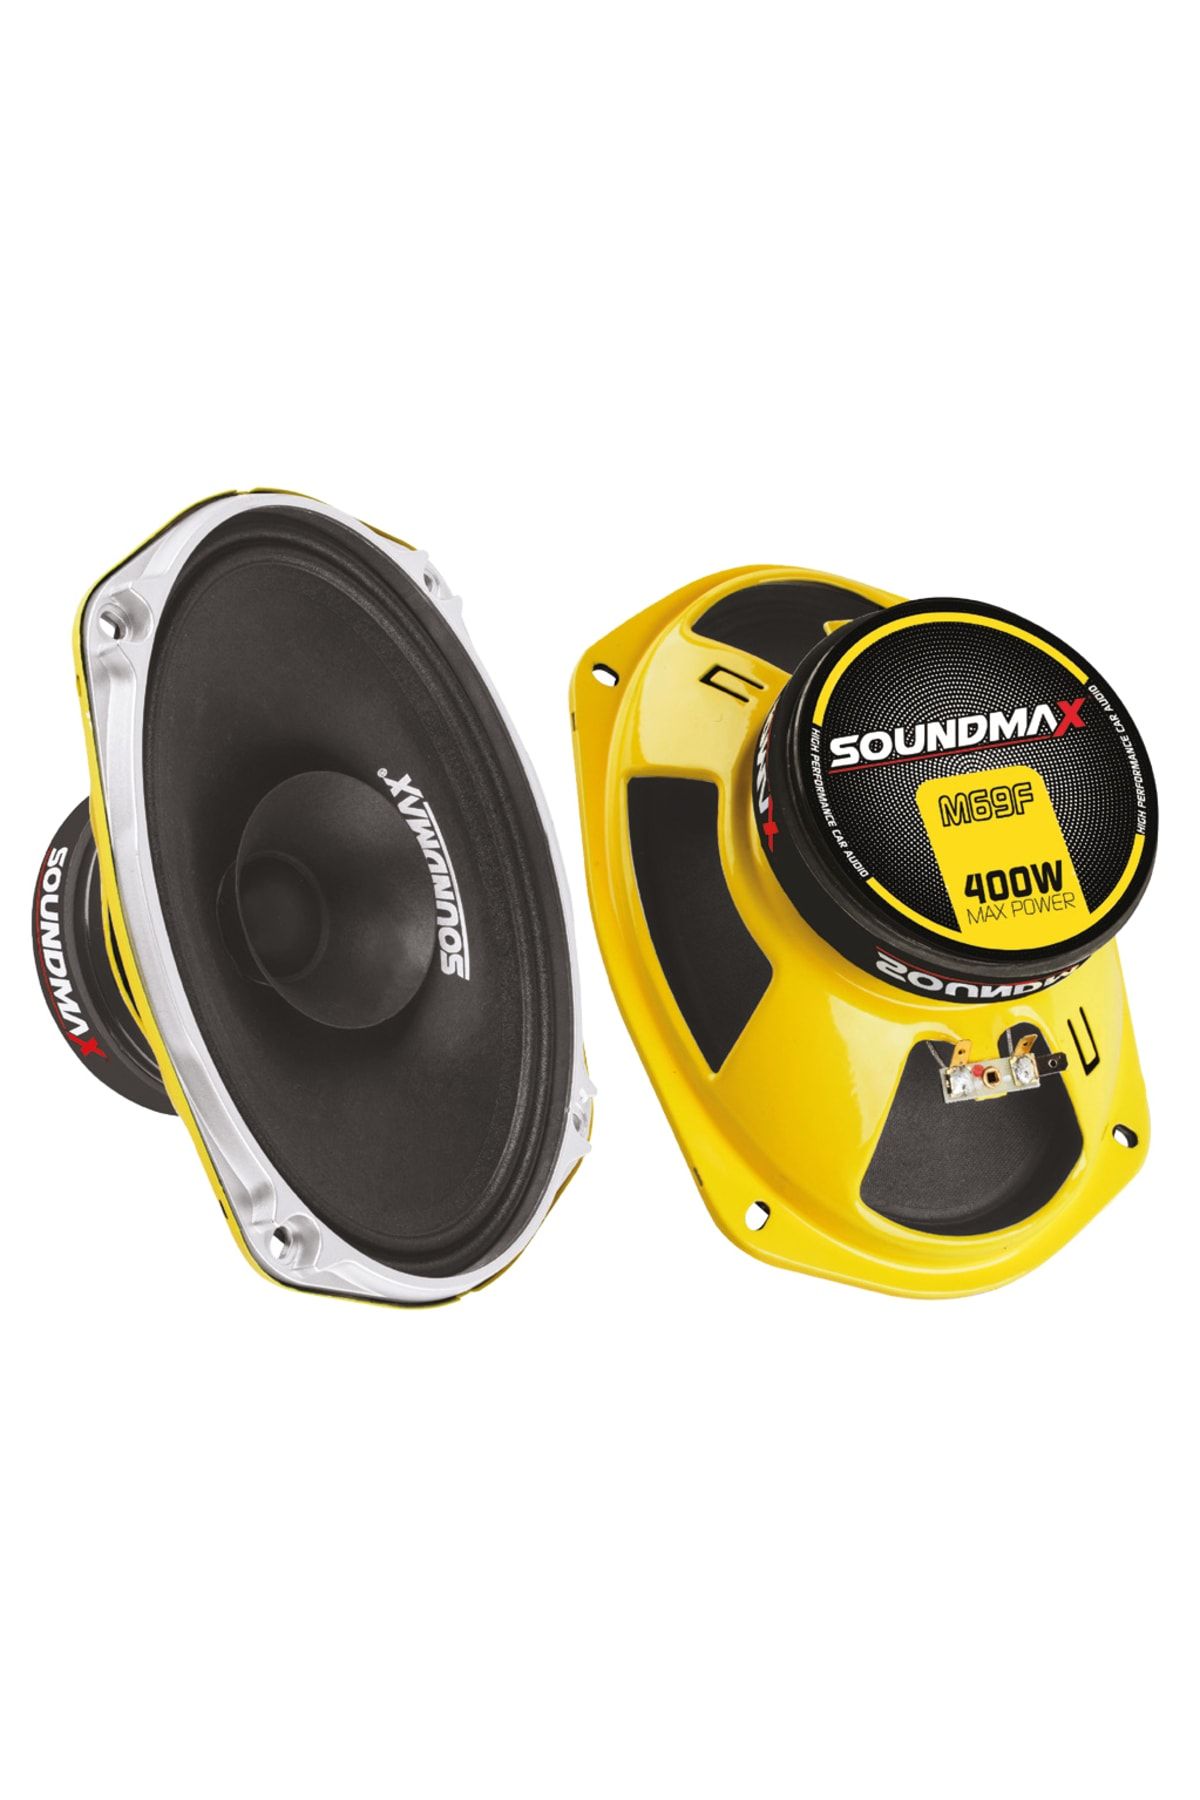 Soundmax Sx-m69f 6x9 Oval 400w Midrange Paketi Çiftli Masella Garage Audio Oval